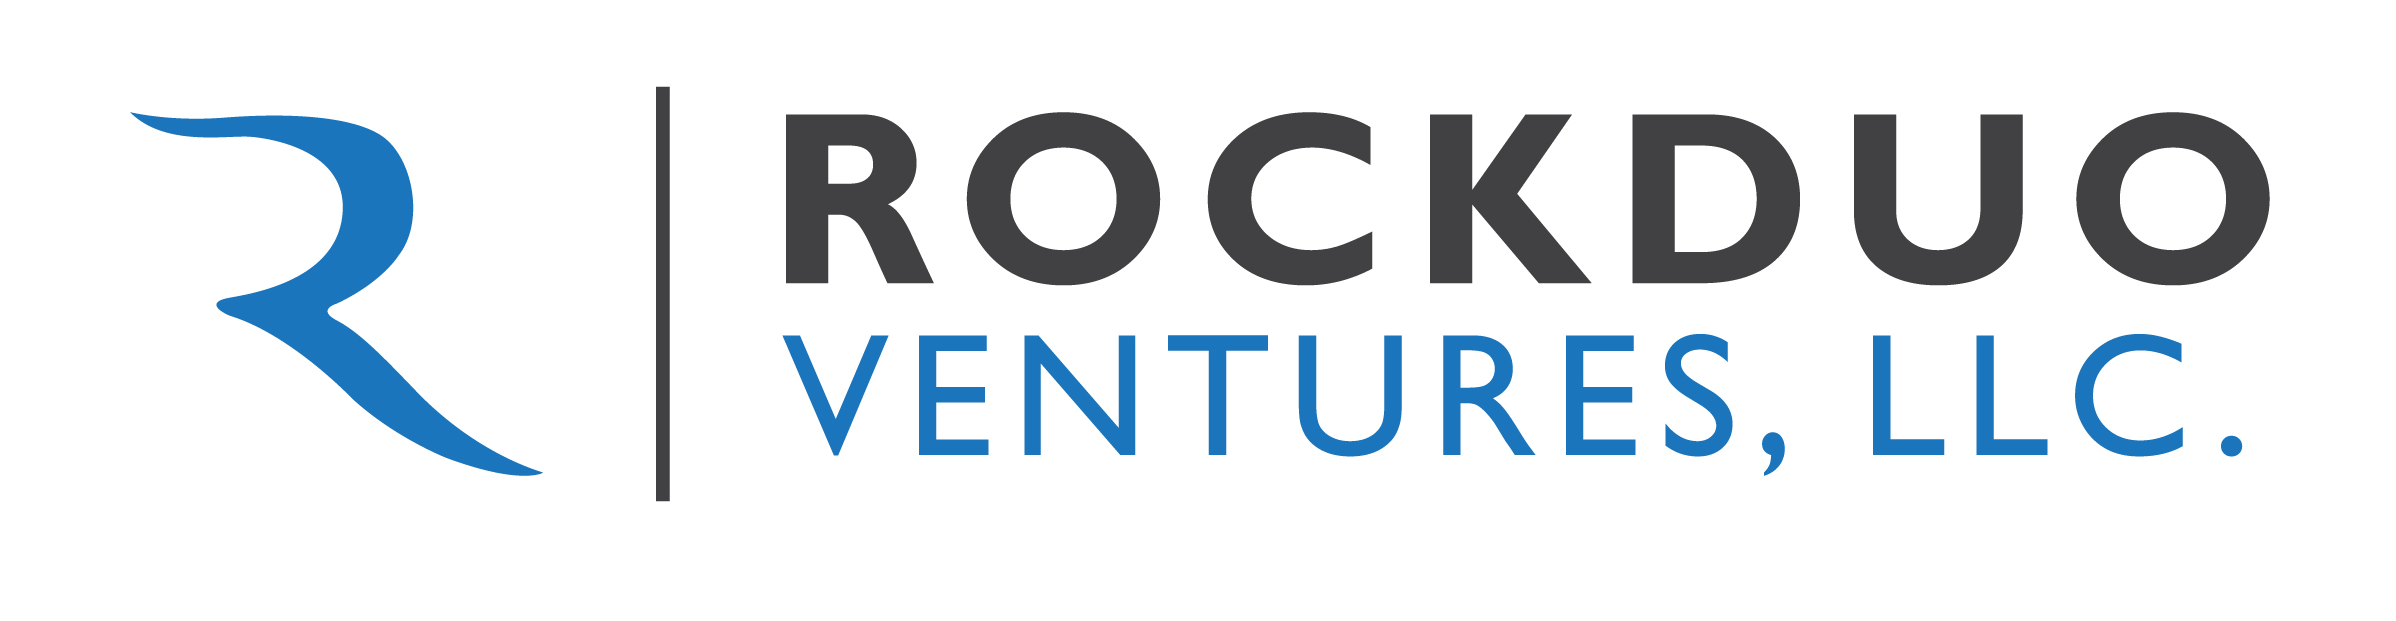 Rockduo Ventures logo